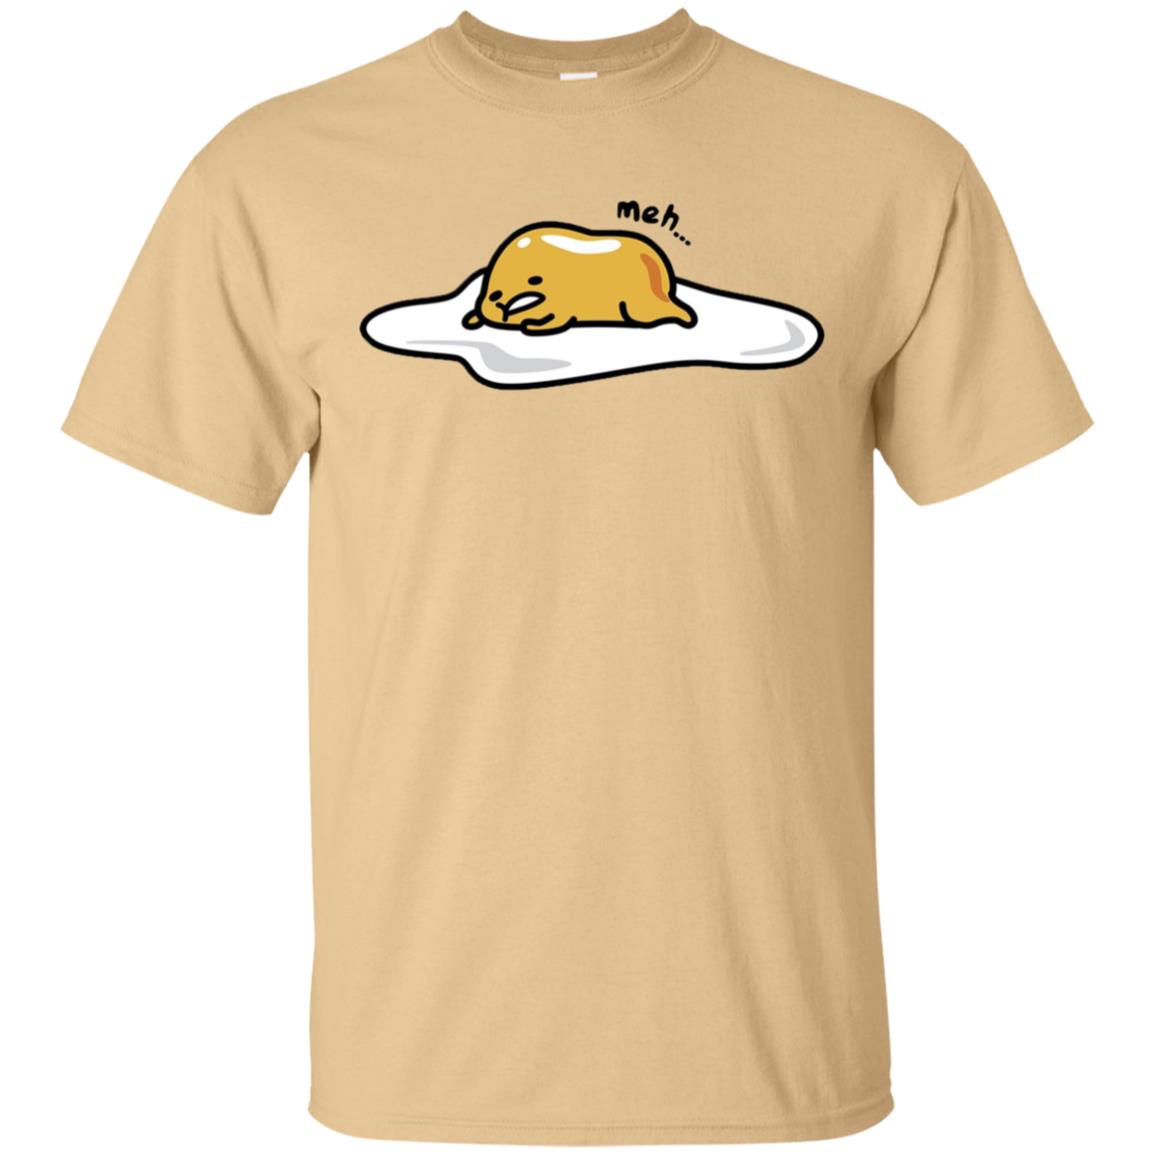 Gudetama shirt - Meh | eBay